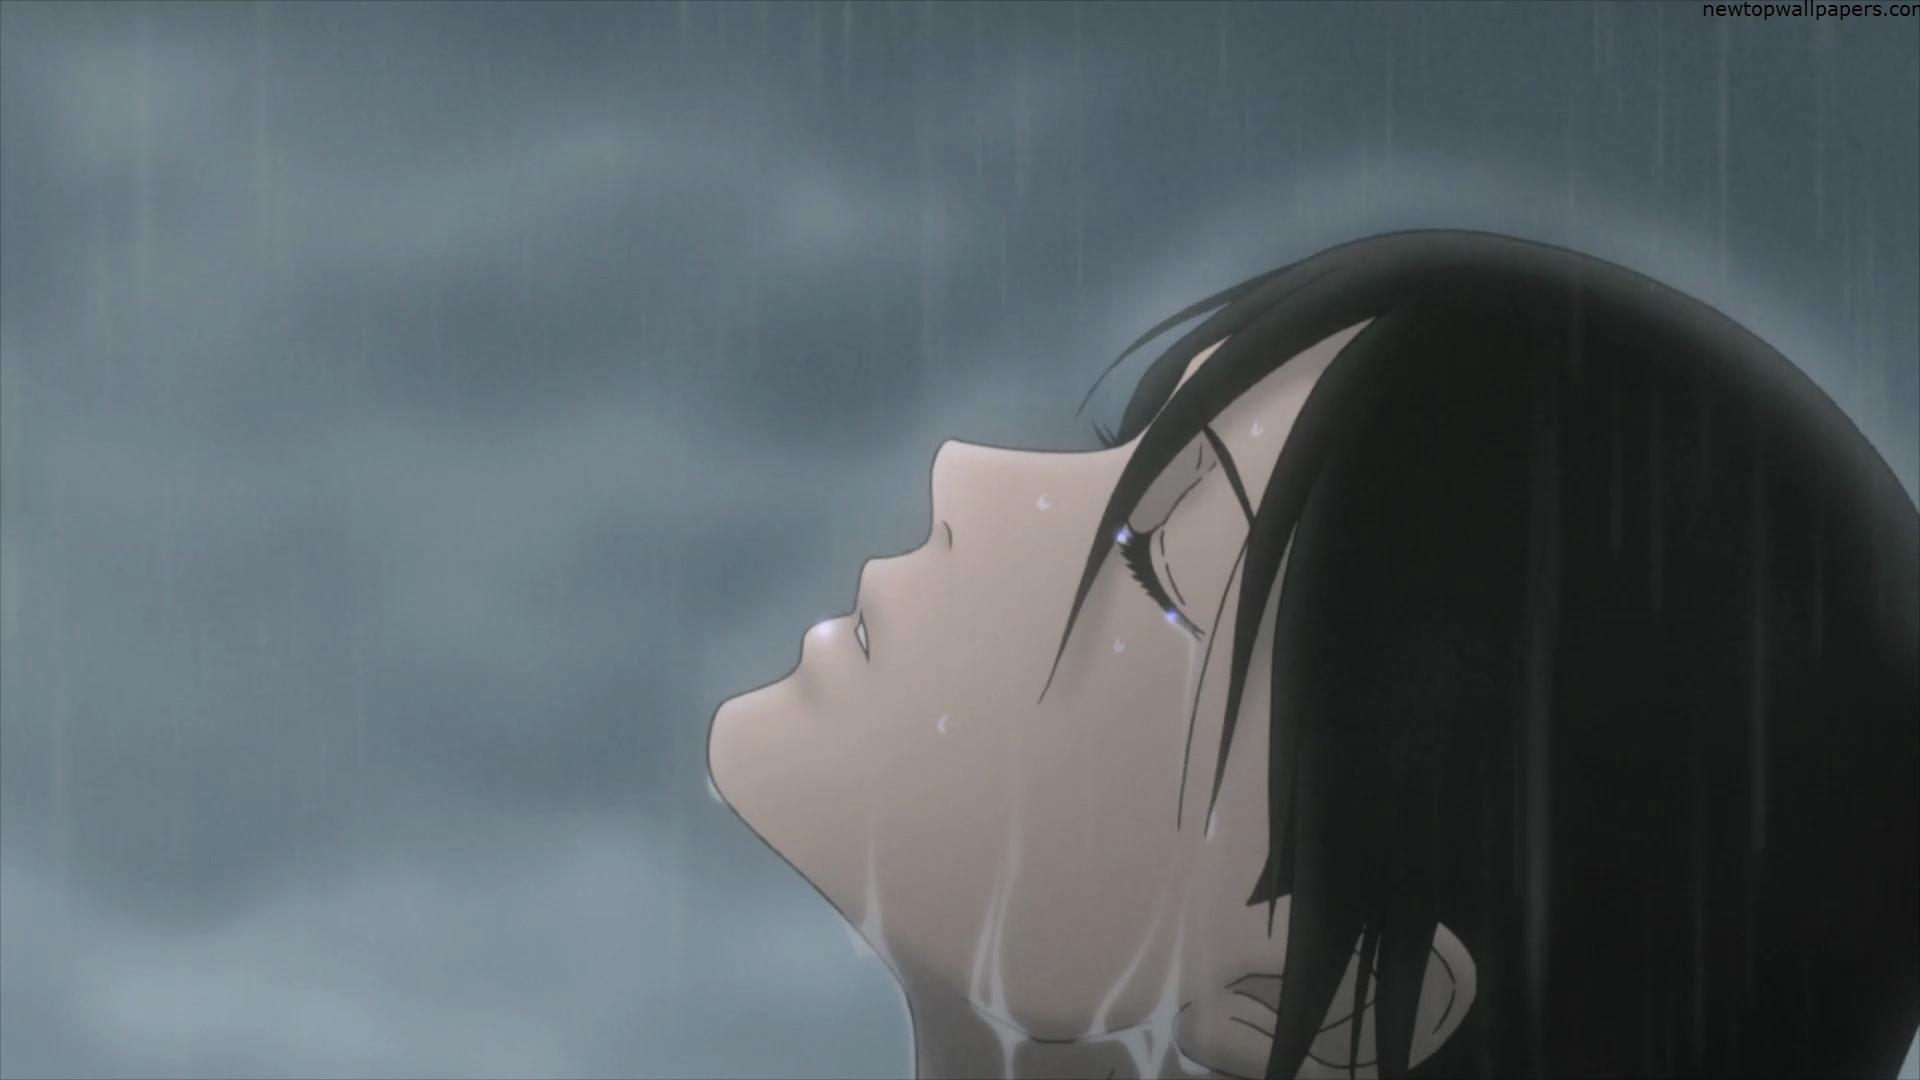 Alone Anime Girl In Rain. Most Wallpaper HD Picture HQ Image